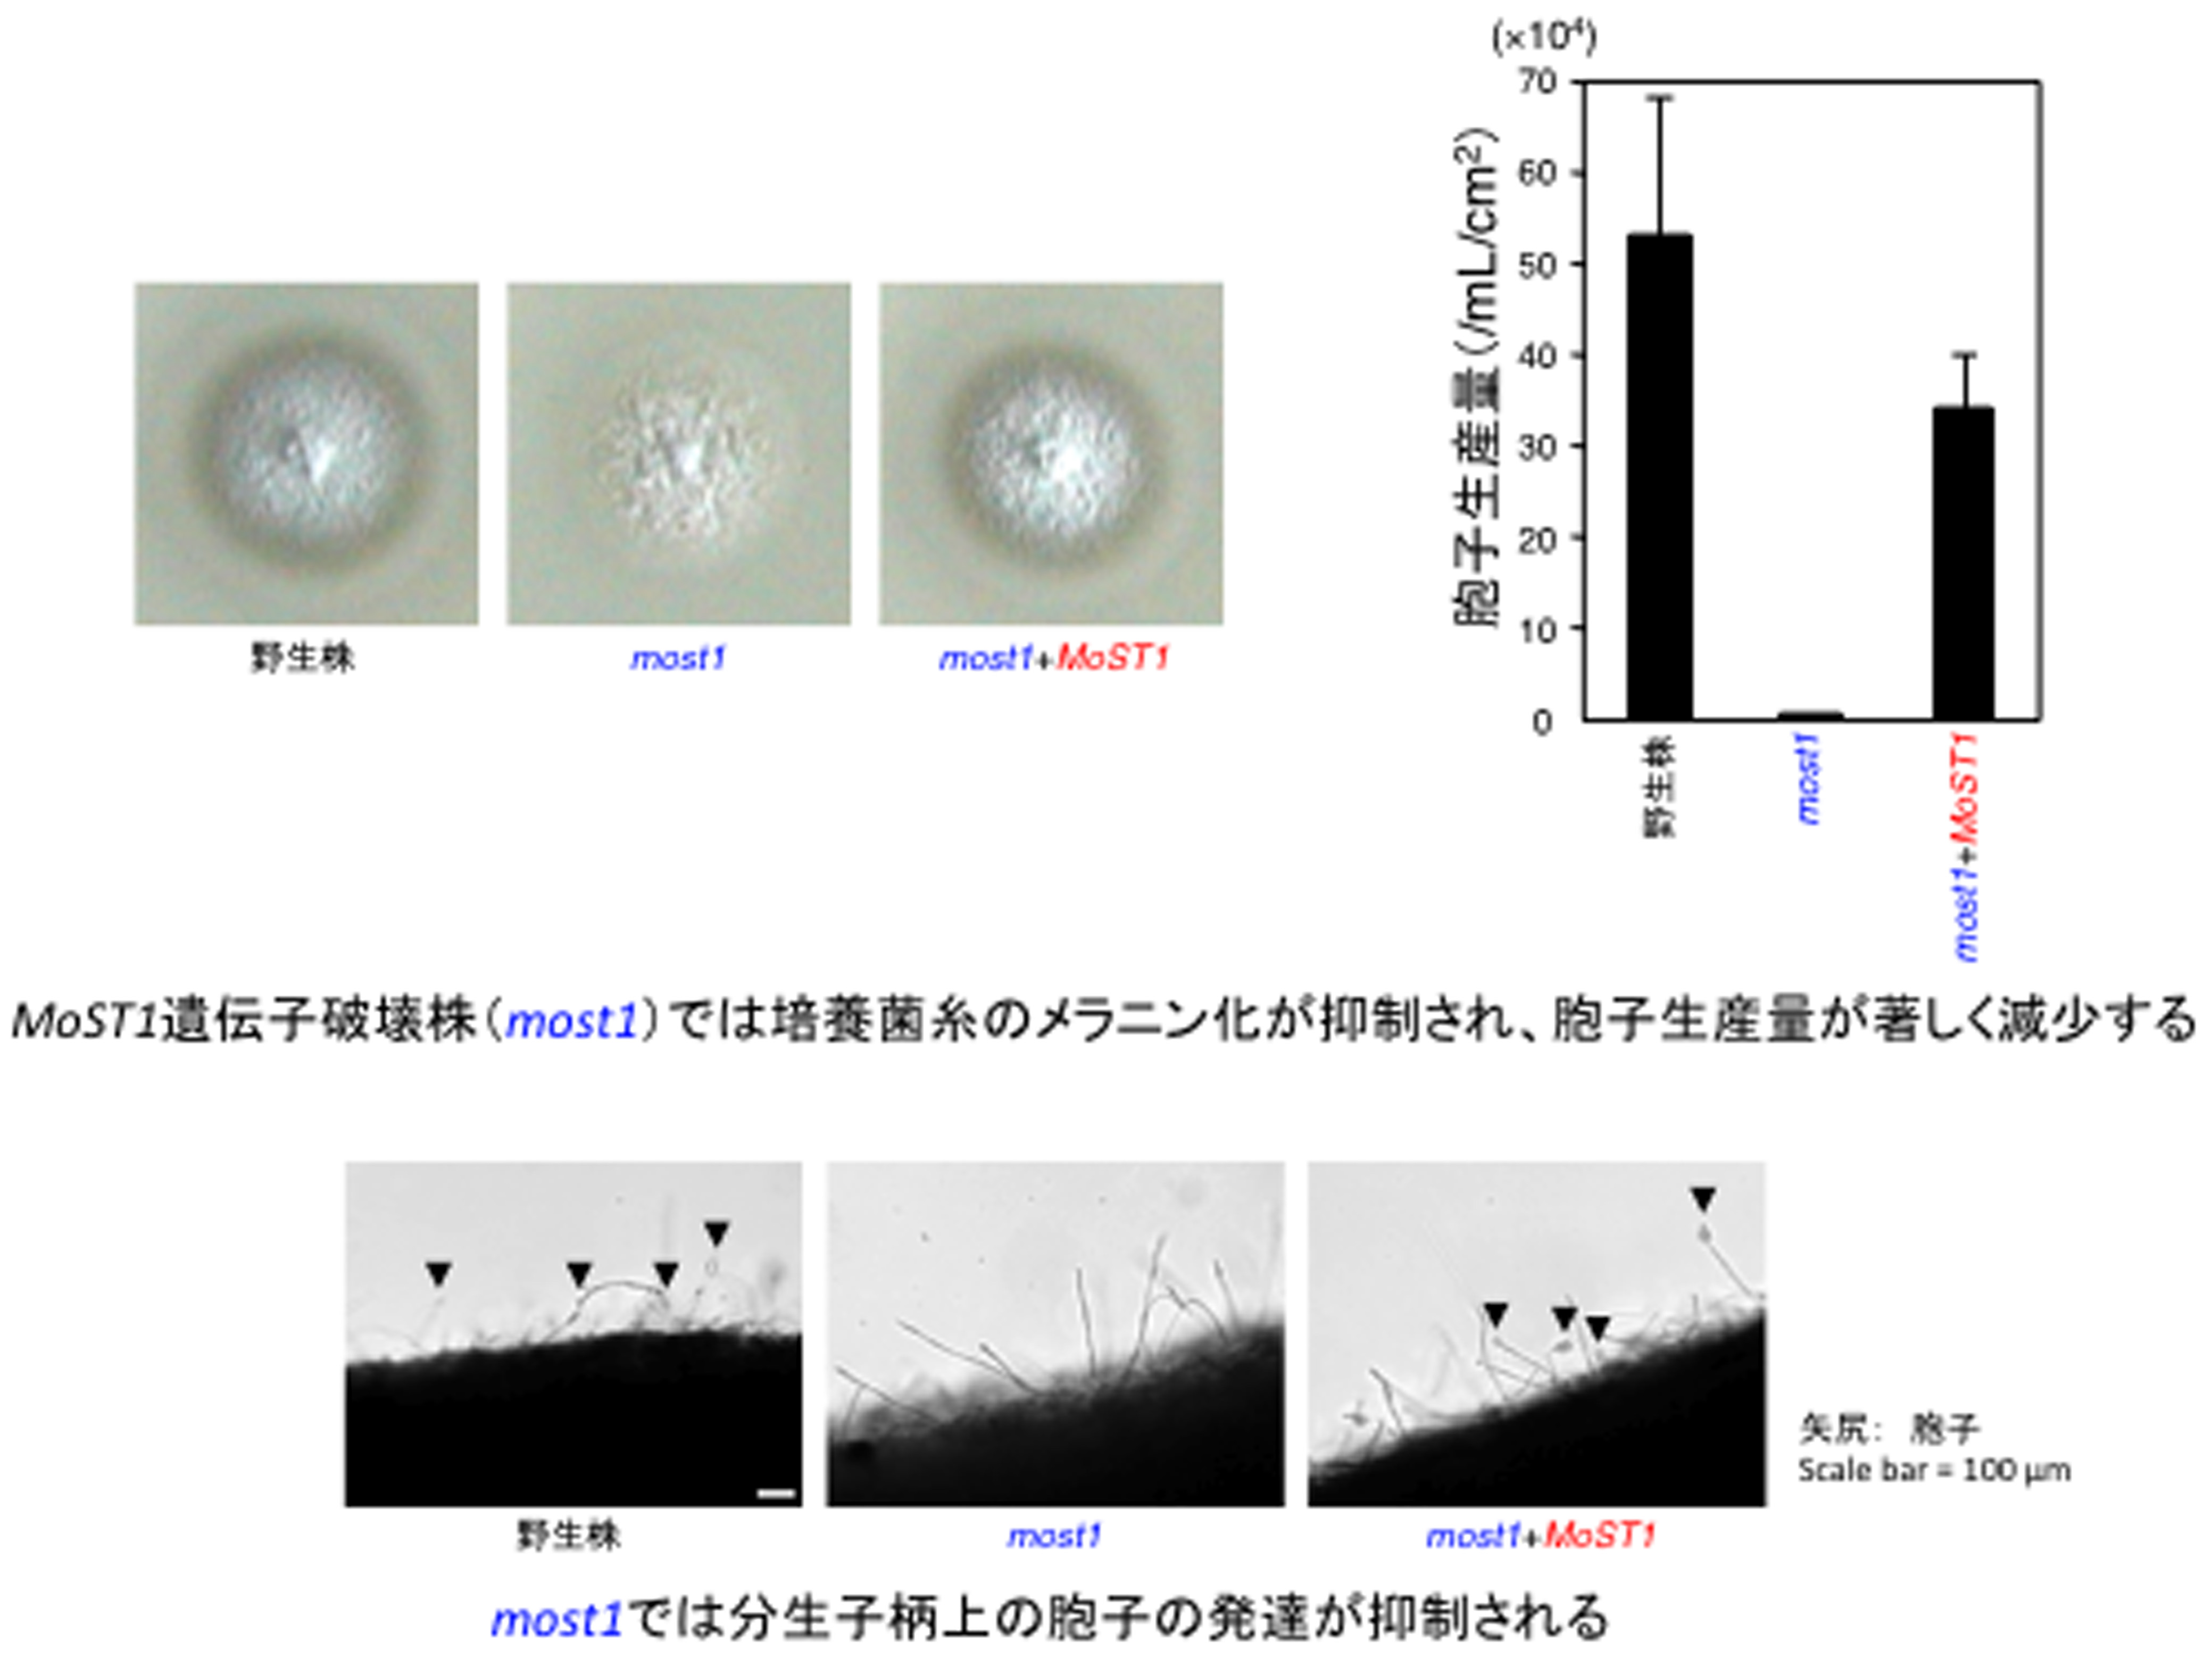 http://www.ige.tohoku.ac.jp/prg/genetics/study_report/upload_items/201403/MoST1_fig.jpg